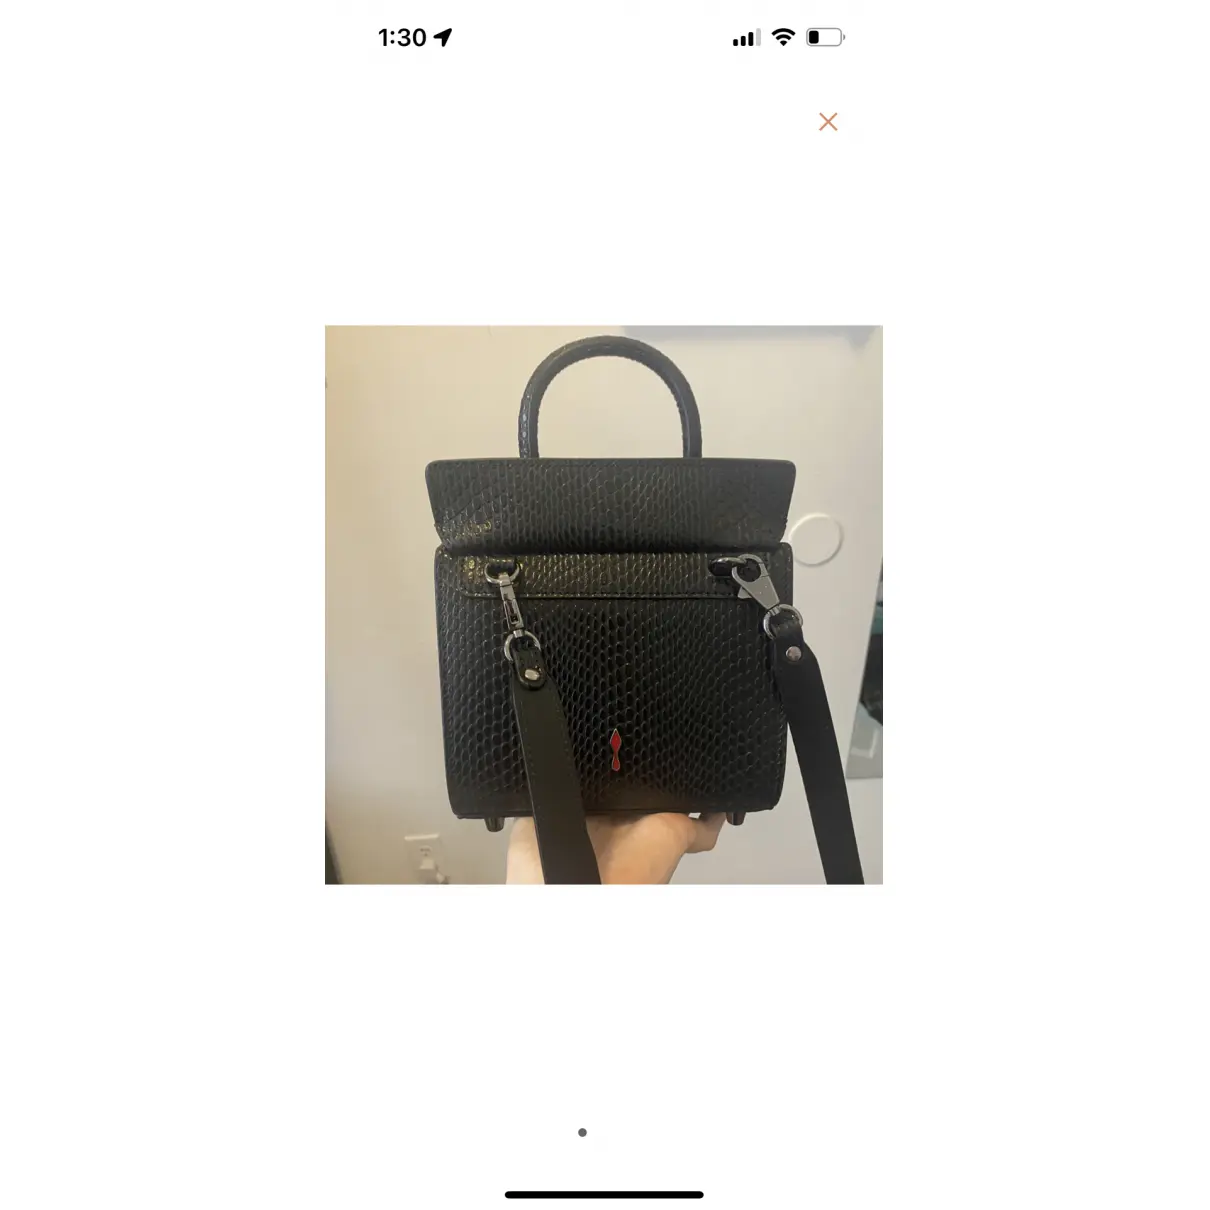 Buy Christian Louboutin Paloma leather crossbody bag online